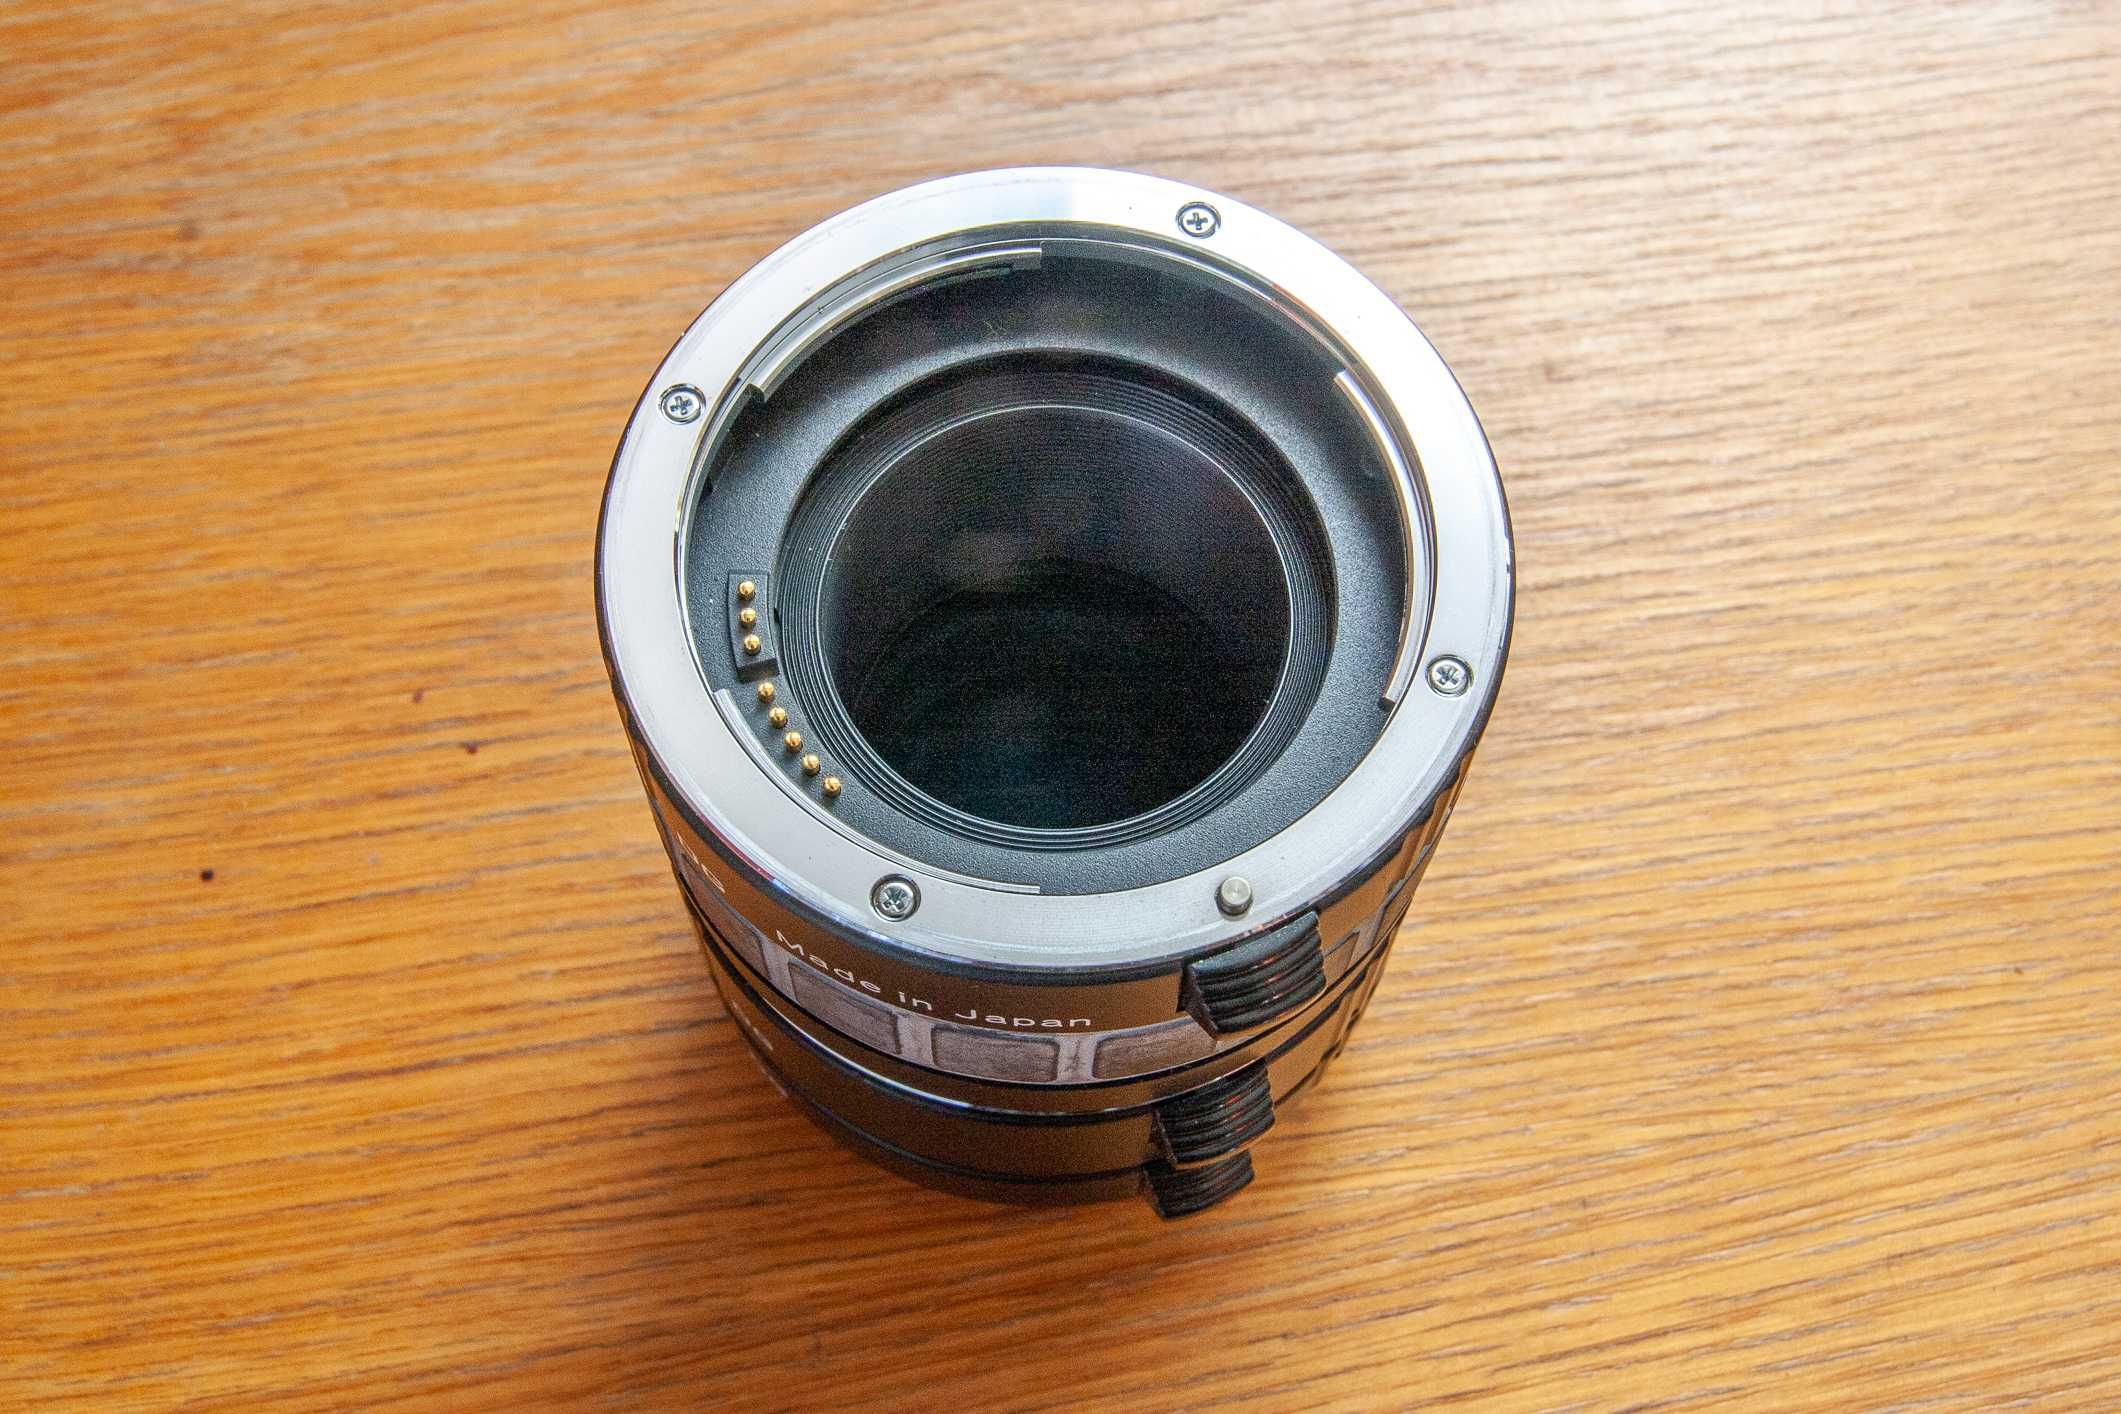 Tuburi de extensie macro Kenko auto focus pentru Canon EF/EF-S